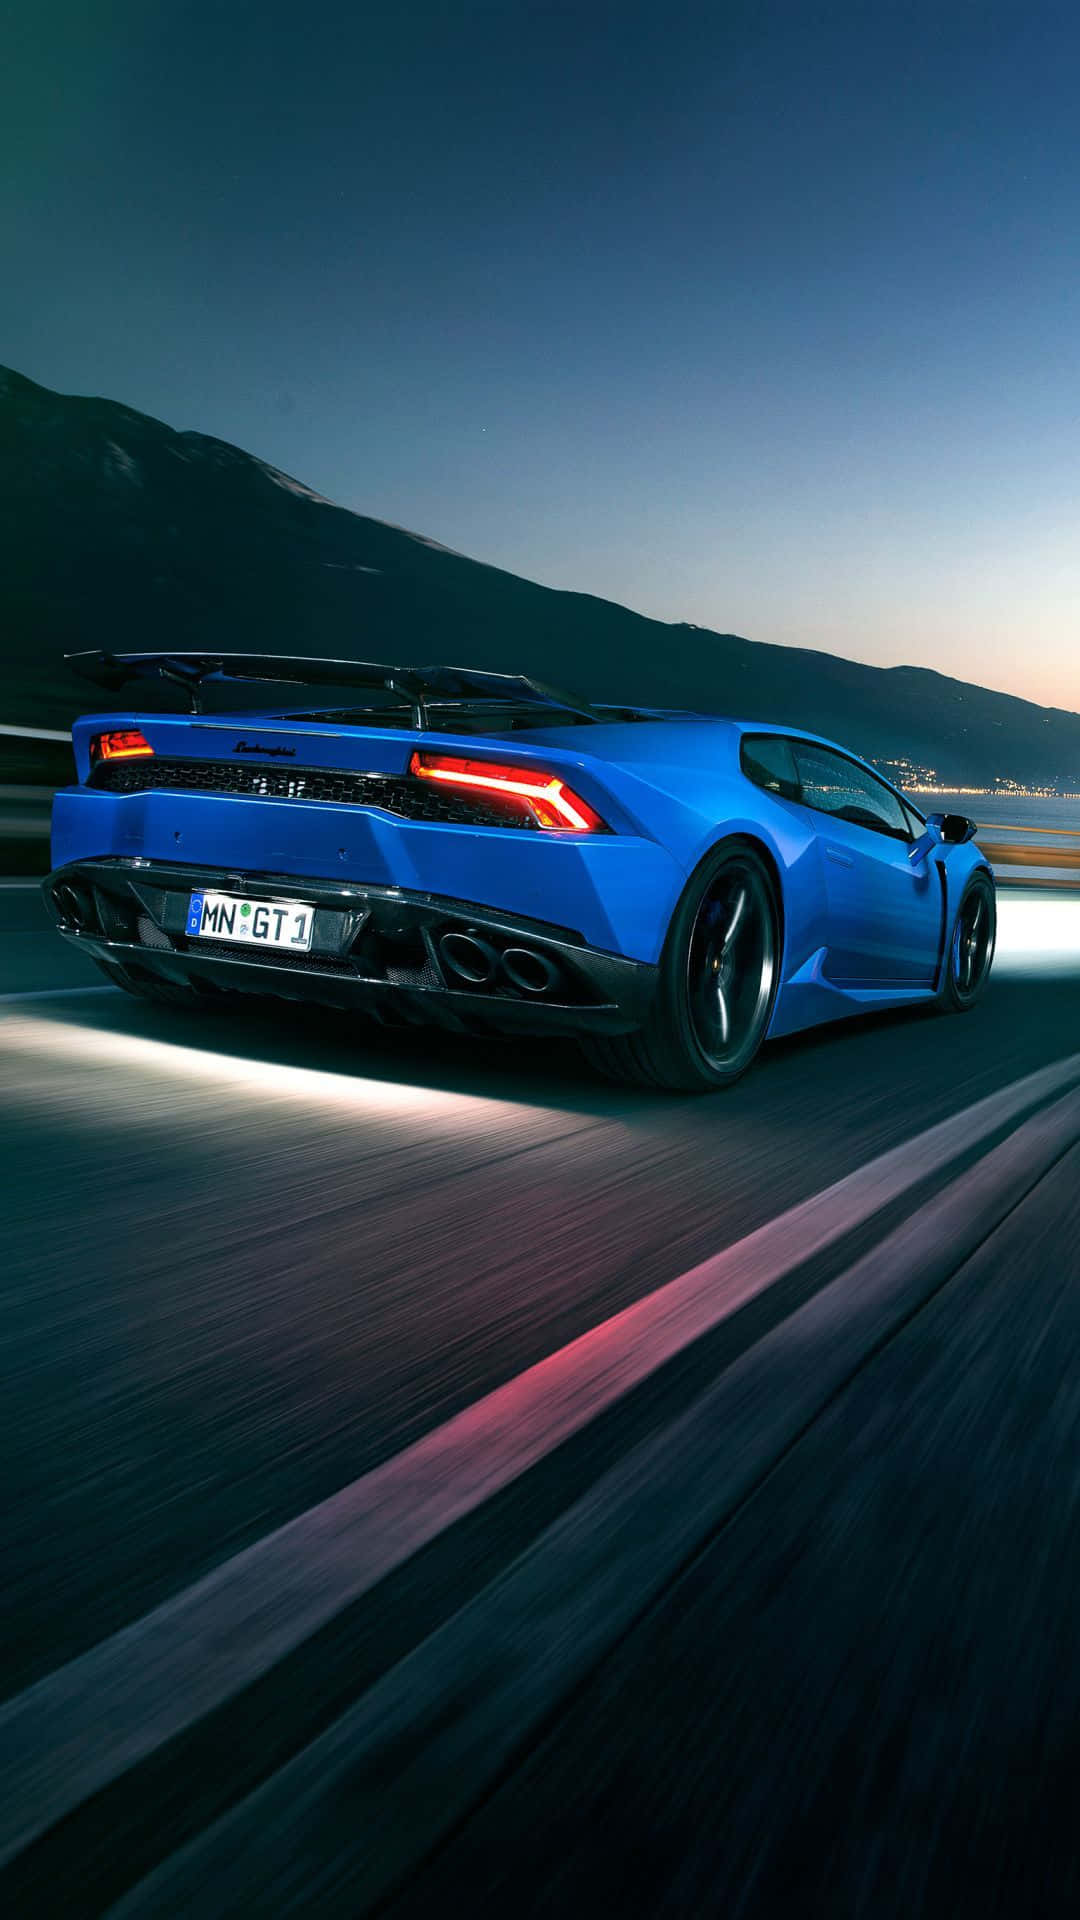 The Blue Lamborghini Huracan Is Driving Down The Road At Night Wallpaper